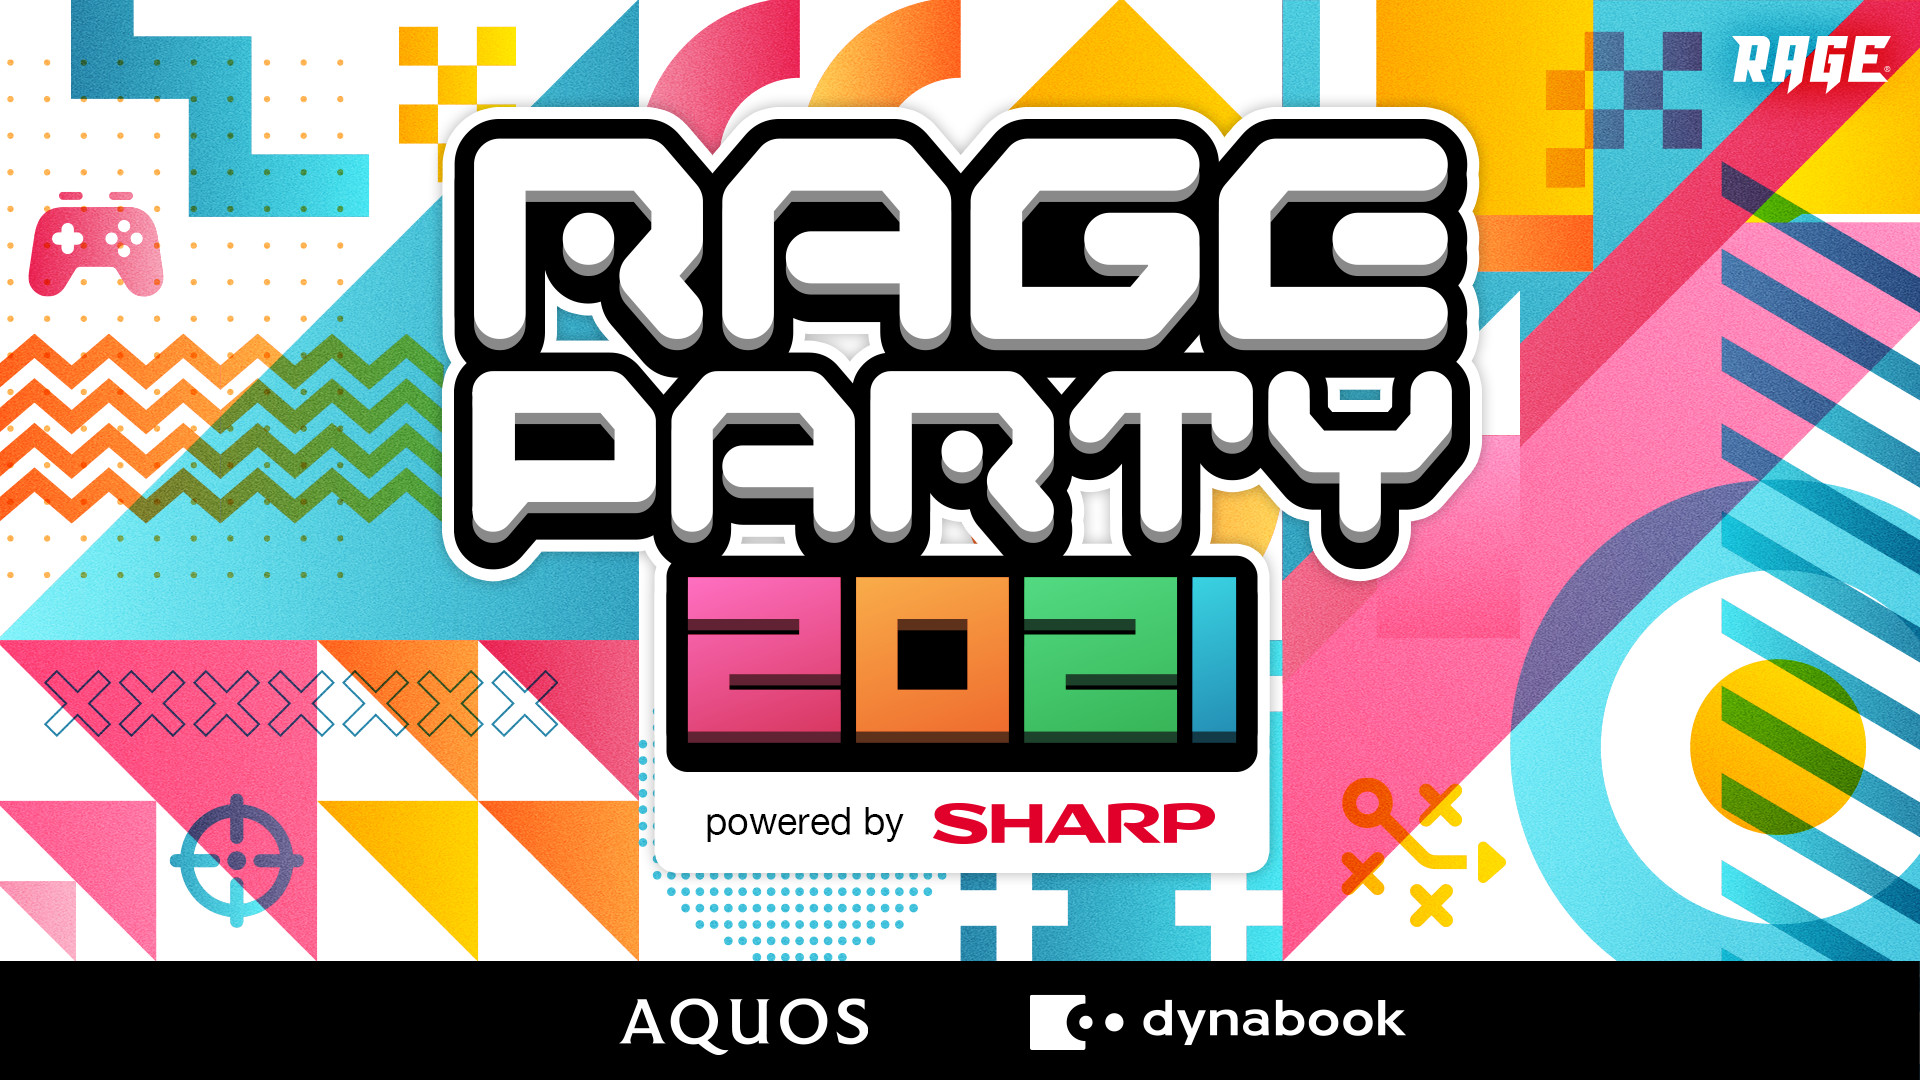 【大会情報】RAGE PARTY 2021 powered by SHARP